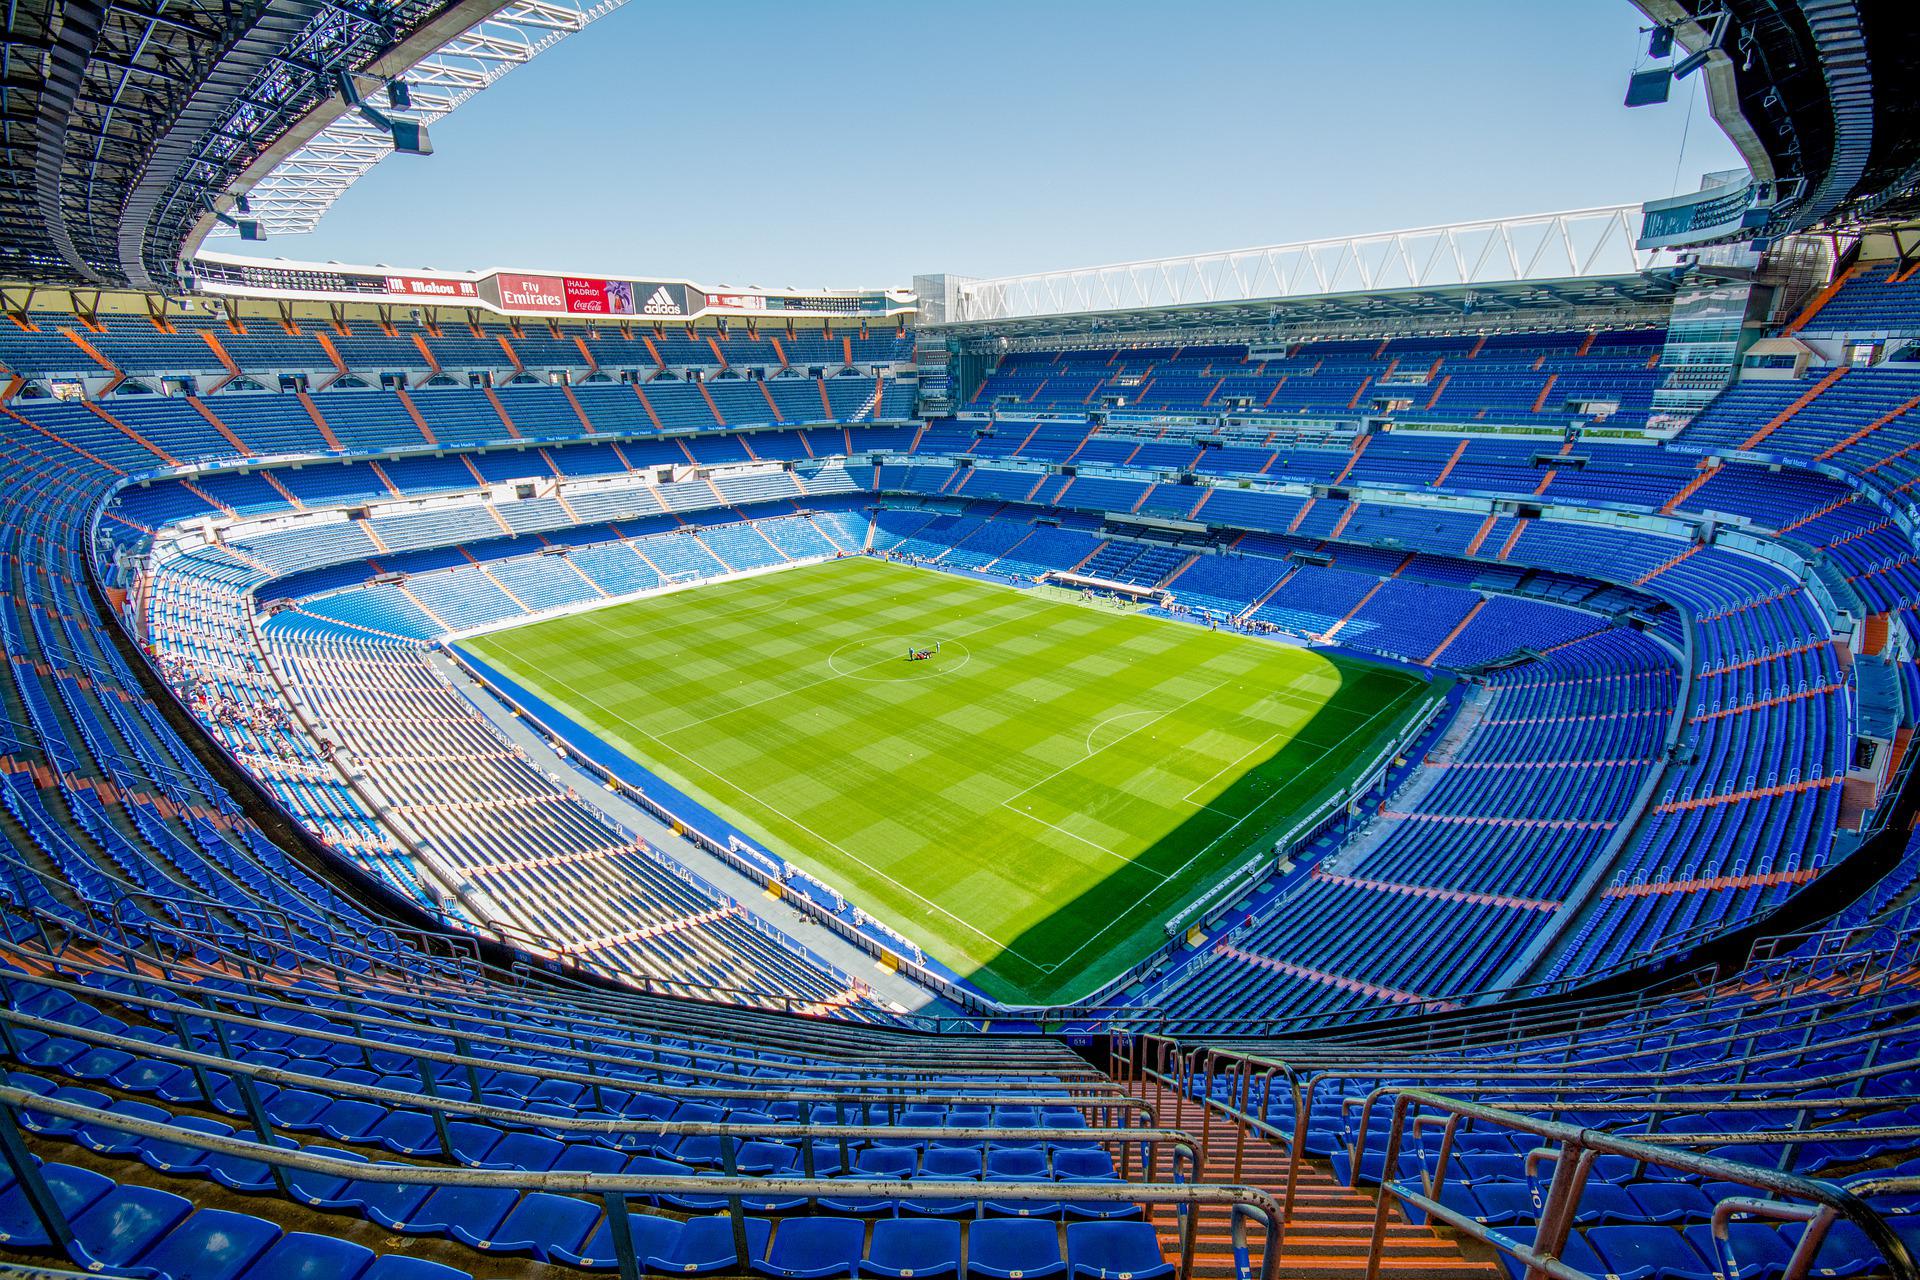 Estadio Santiago Bernabeu, Madrid